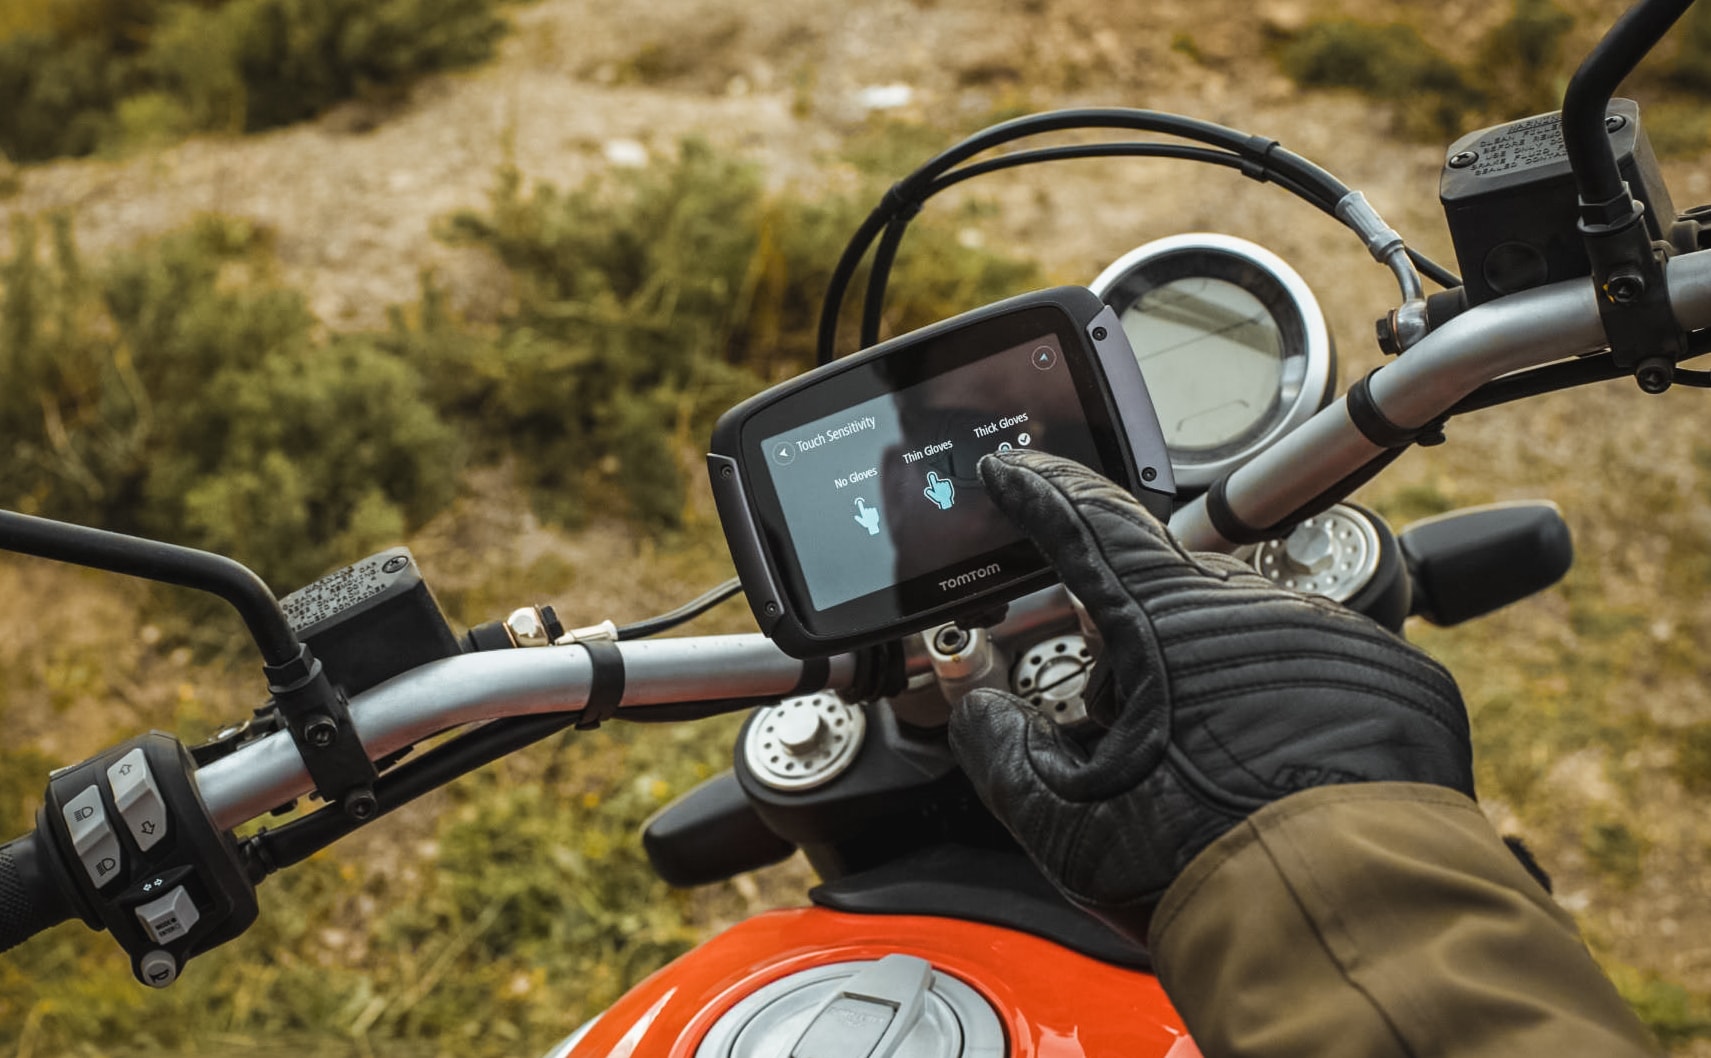 TomTom GPS til motorcykler | Seneste i TomTom Rider-serien kørere.